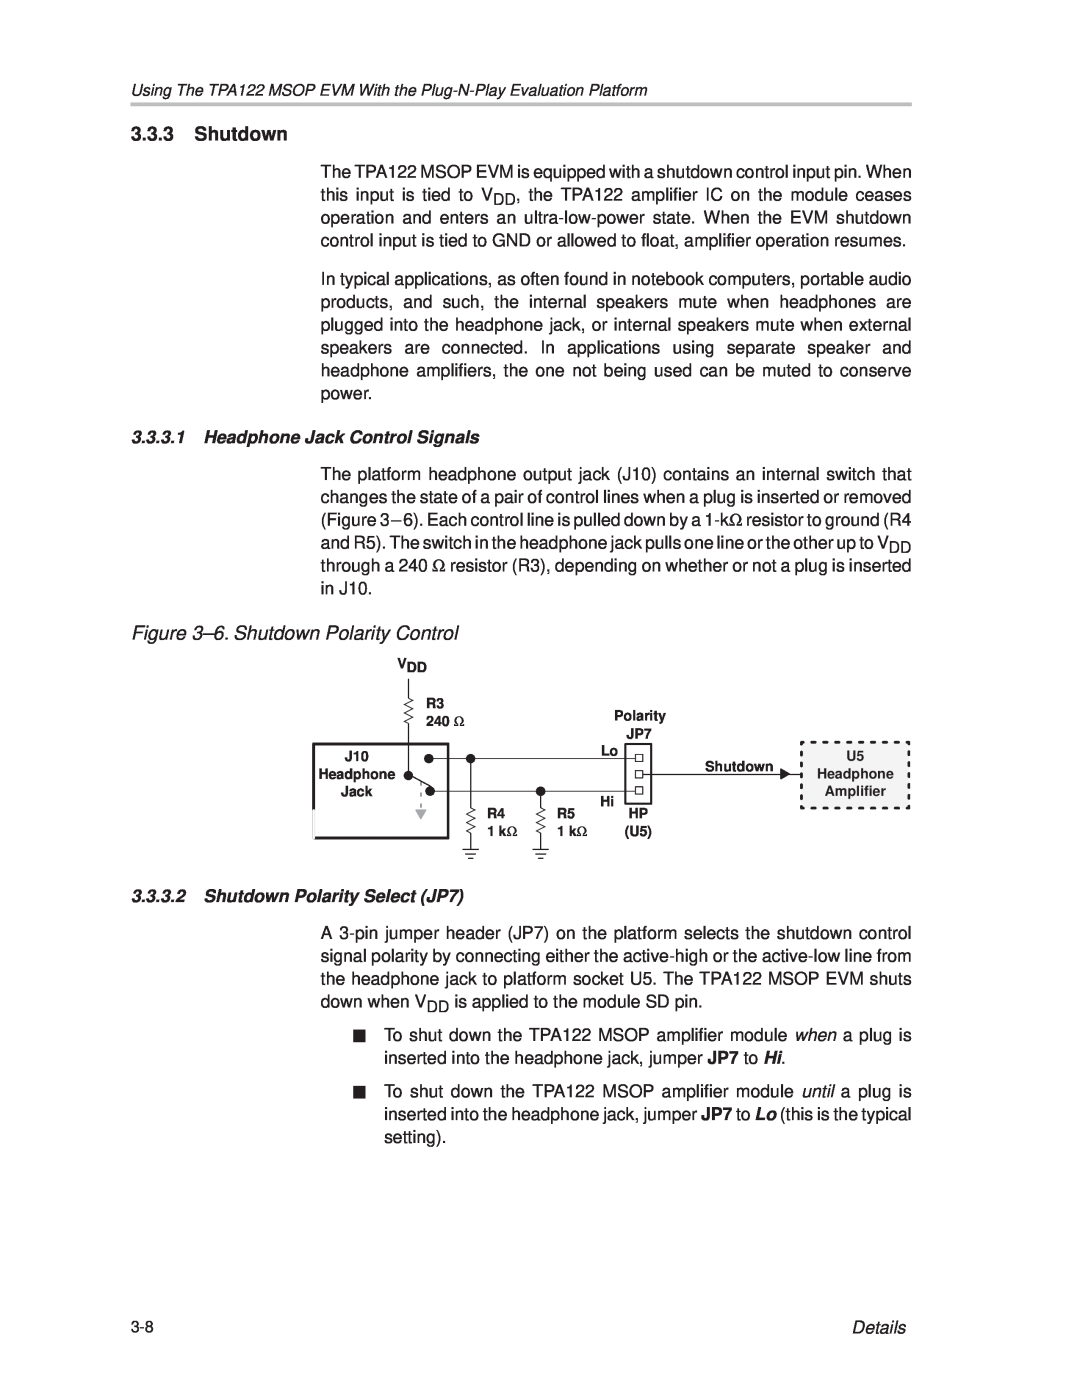 Texas Instruments SLOU025 manual 3.3.3Shutdown, ±6. Shutdown Polarity Control, Details 